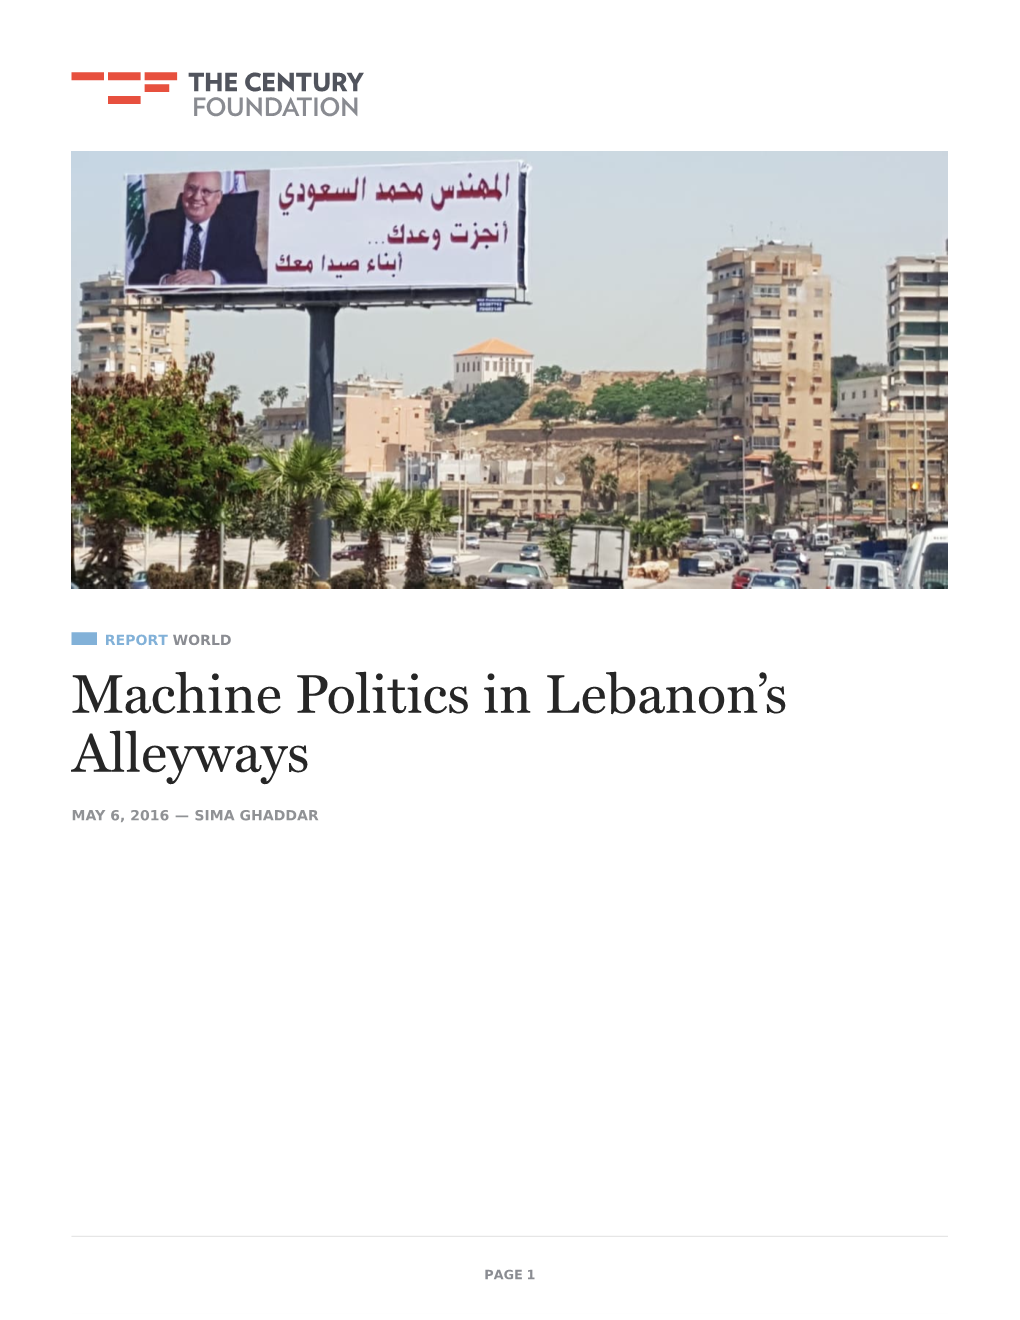 Machine Politics in Lebanon's Alleyways